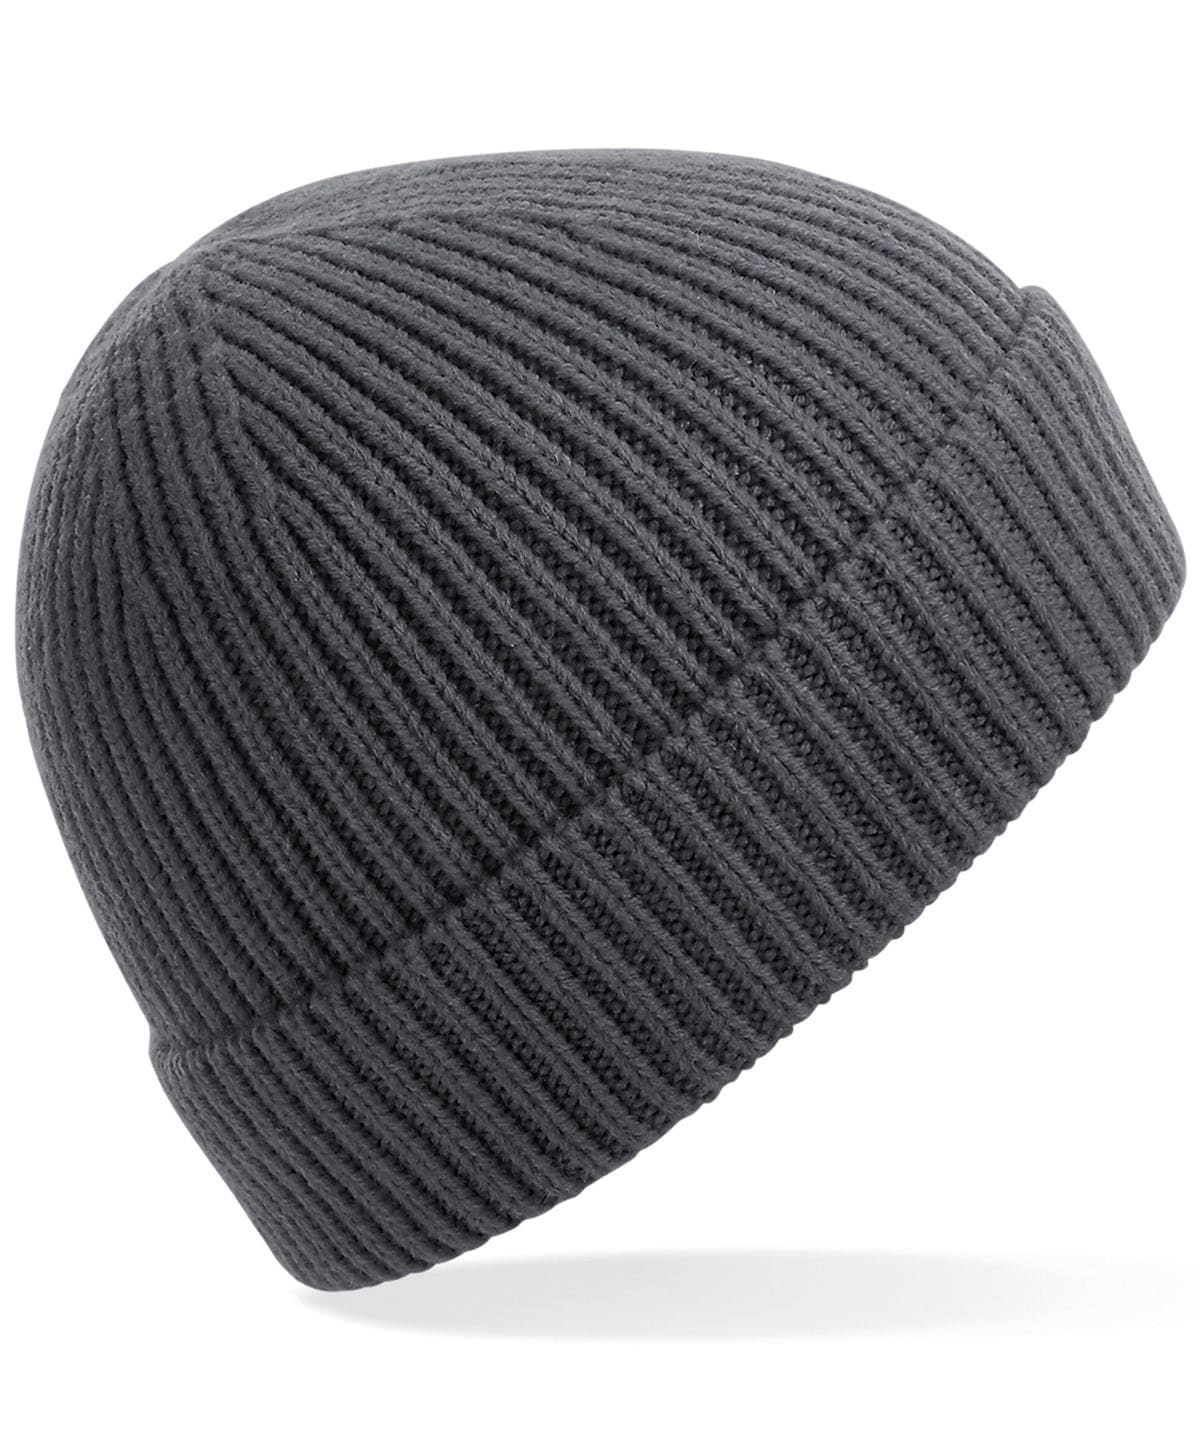 Graphite Grey - Engineered knit ribbed beanie